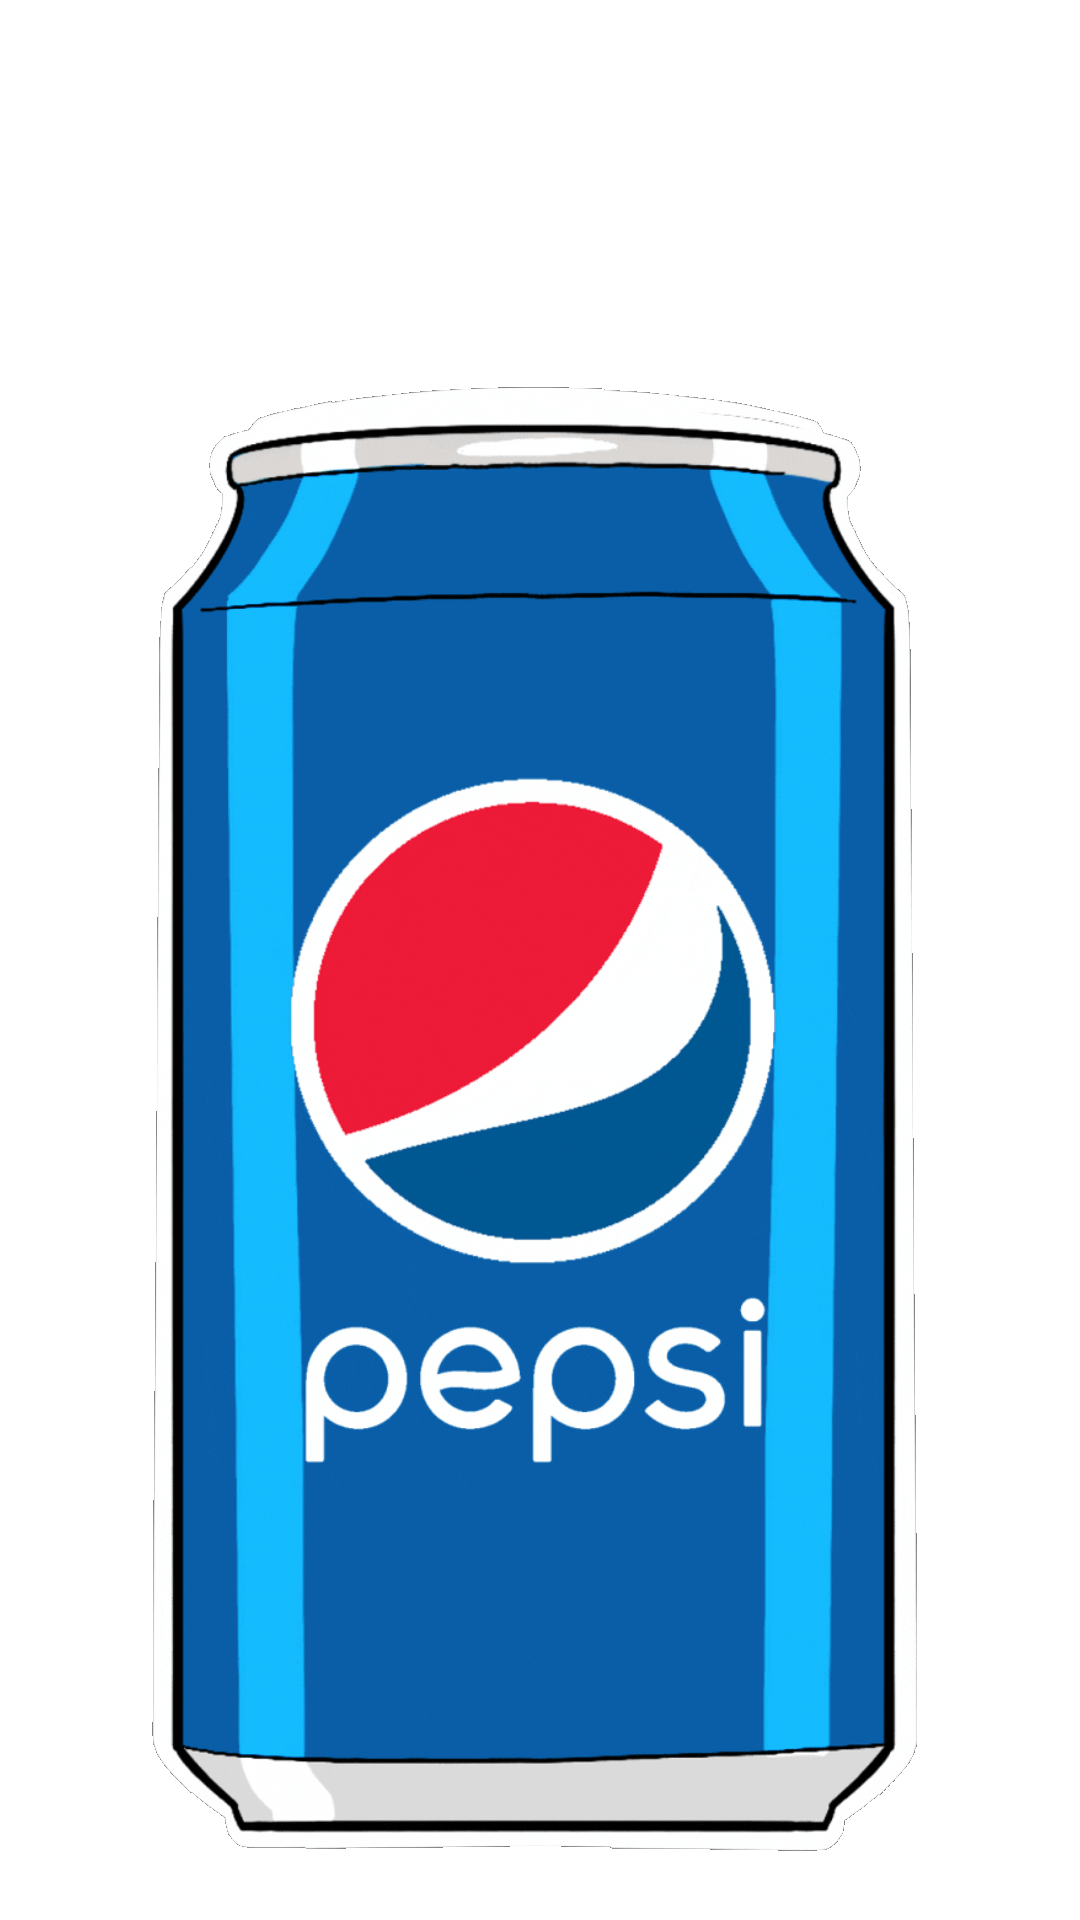 Sticker by Pepsi